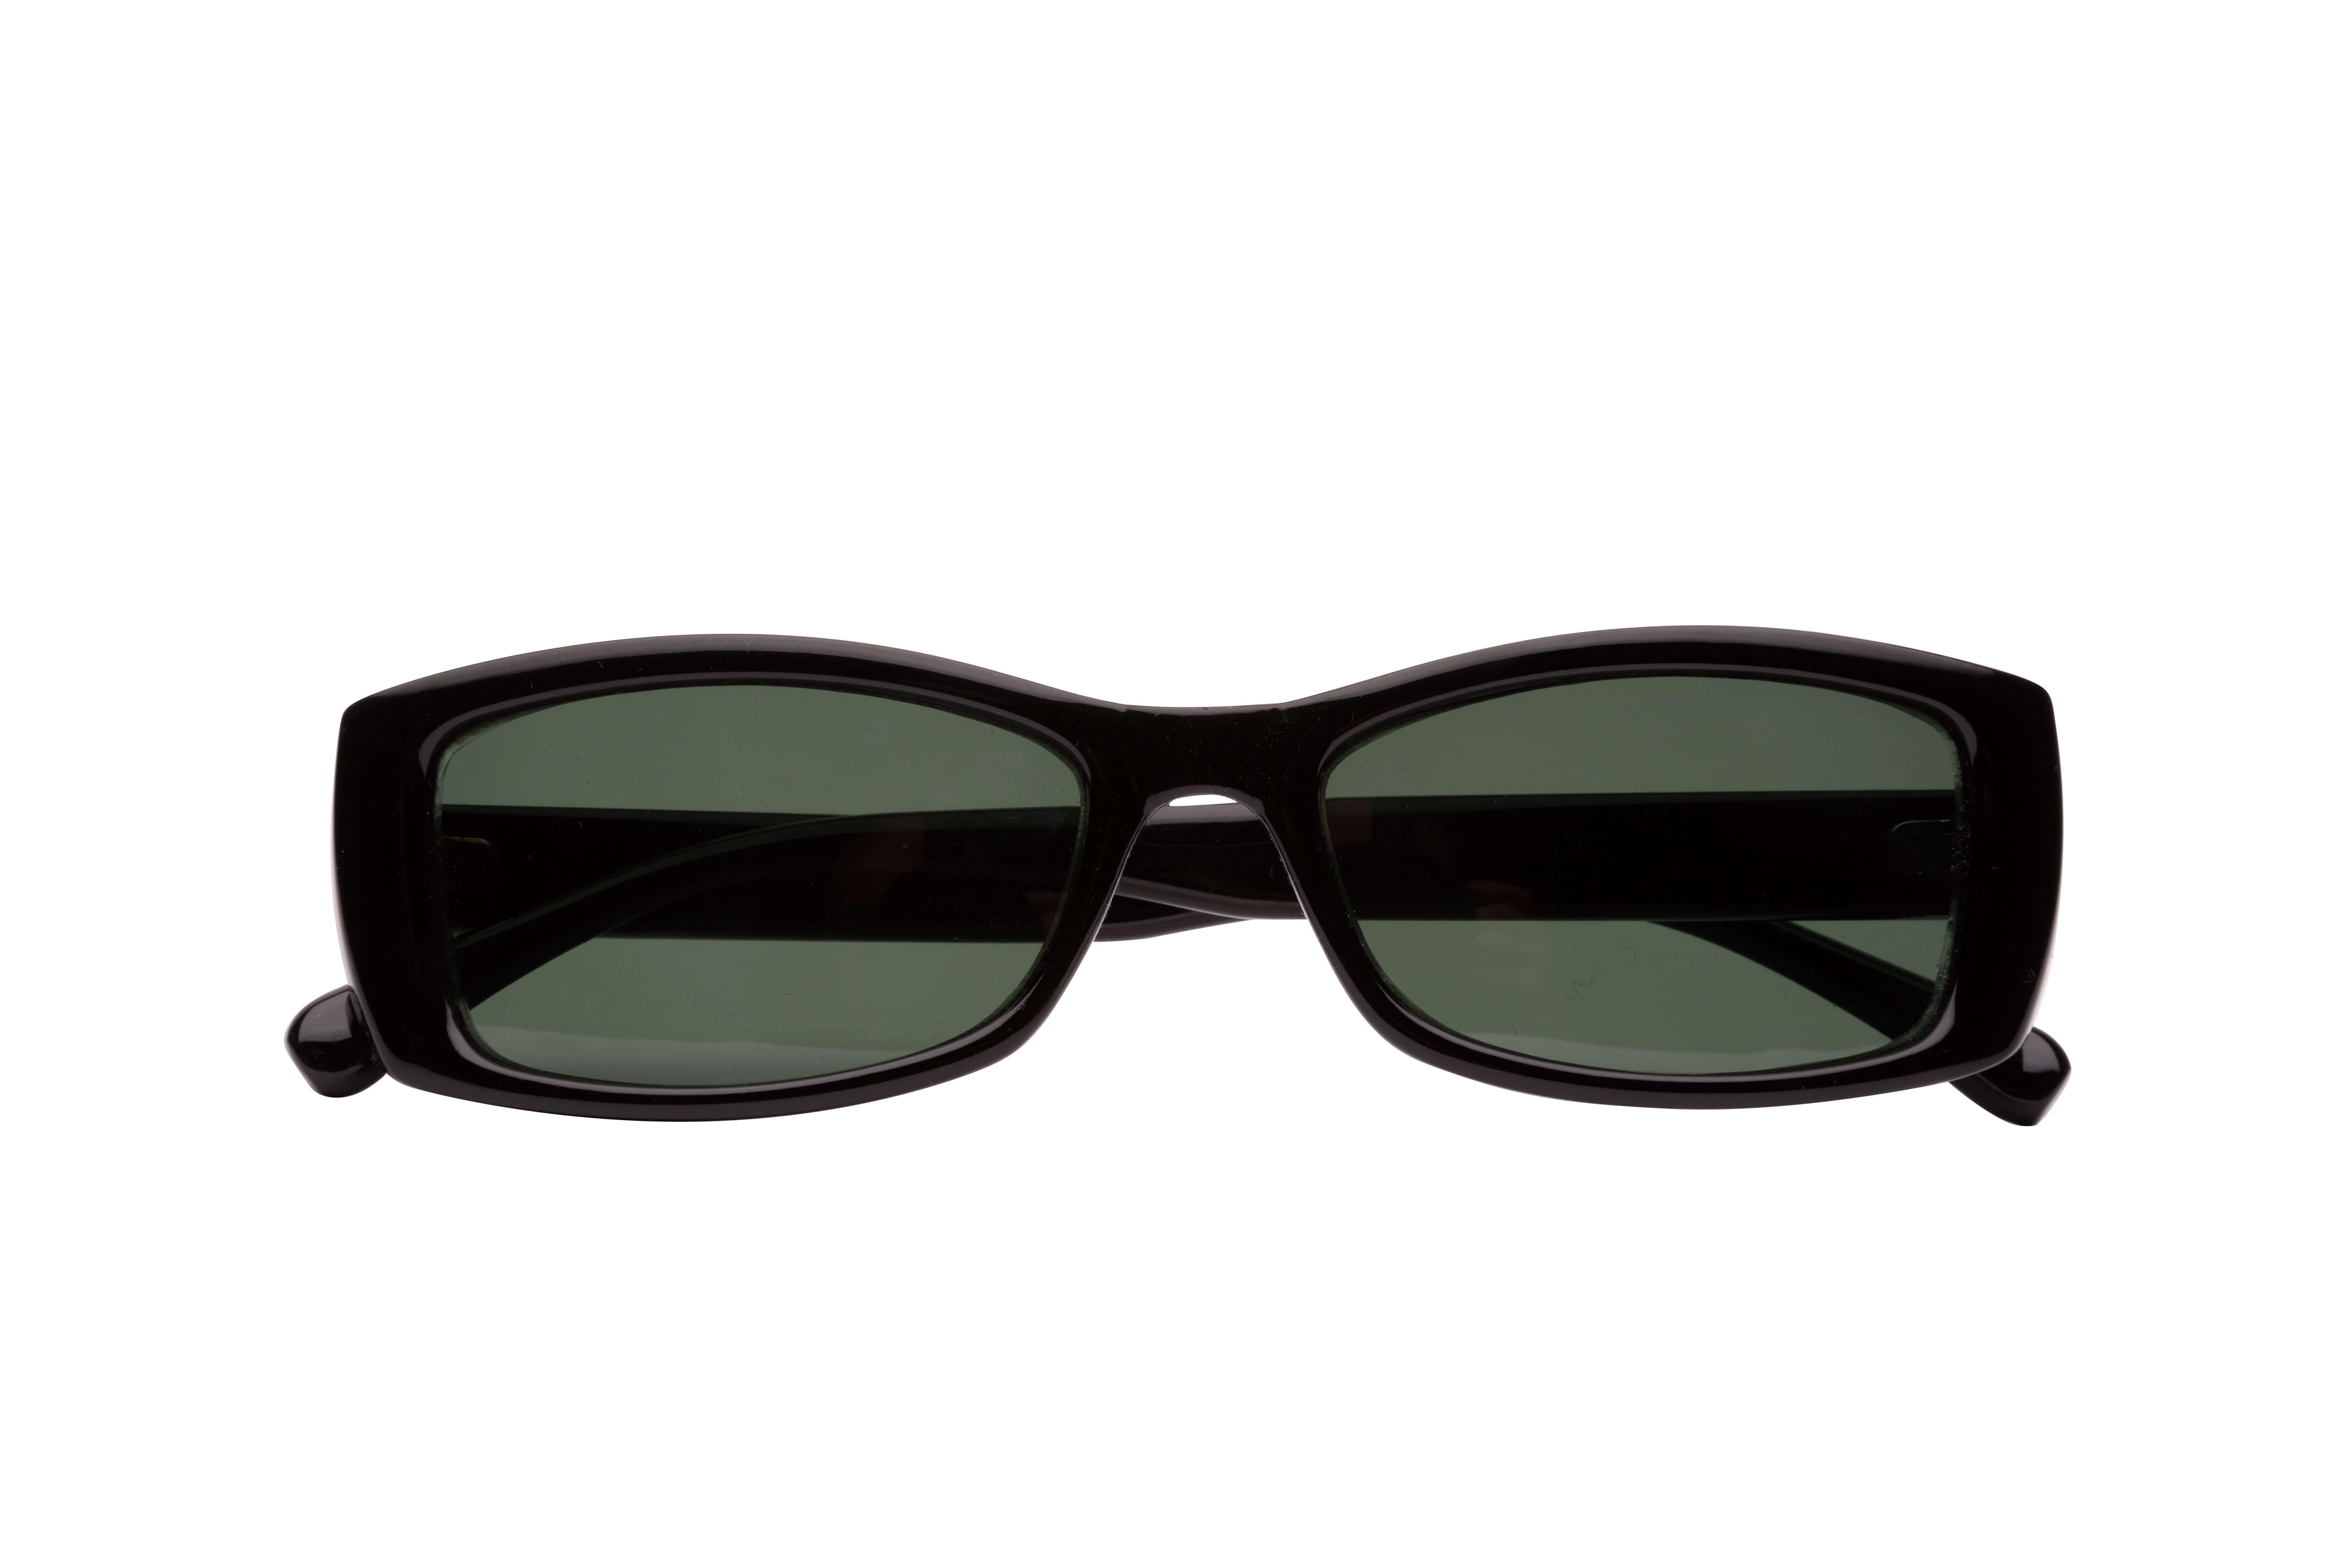 Sonnenbrille im Karree Style black-glossy green SP-930 | LOOKS by Wolfgang Joop